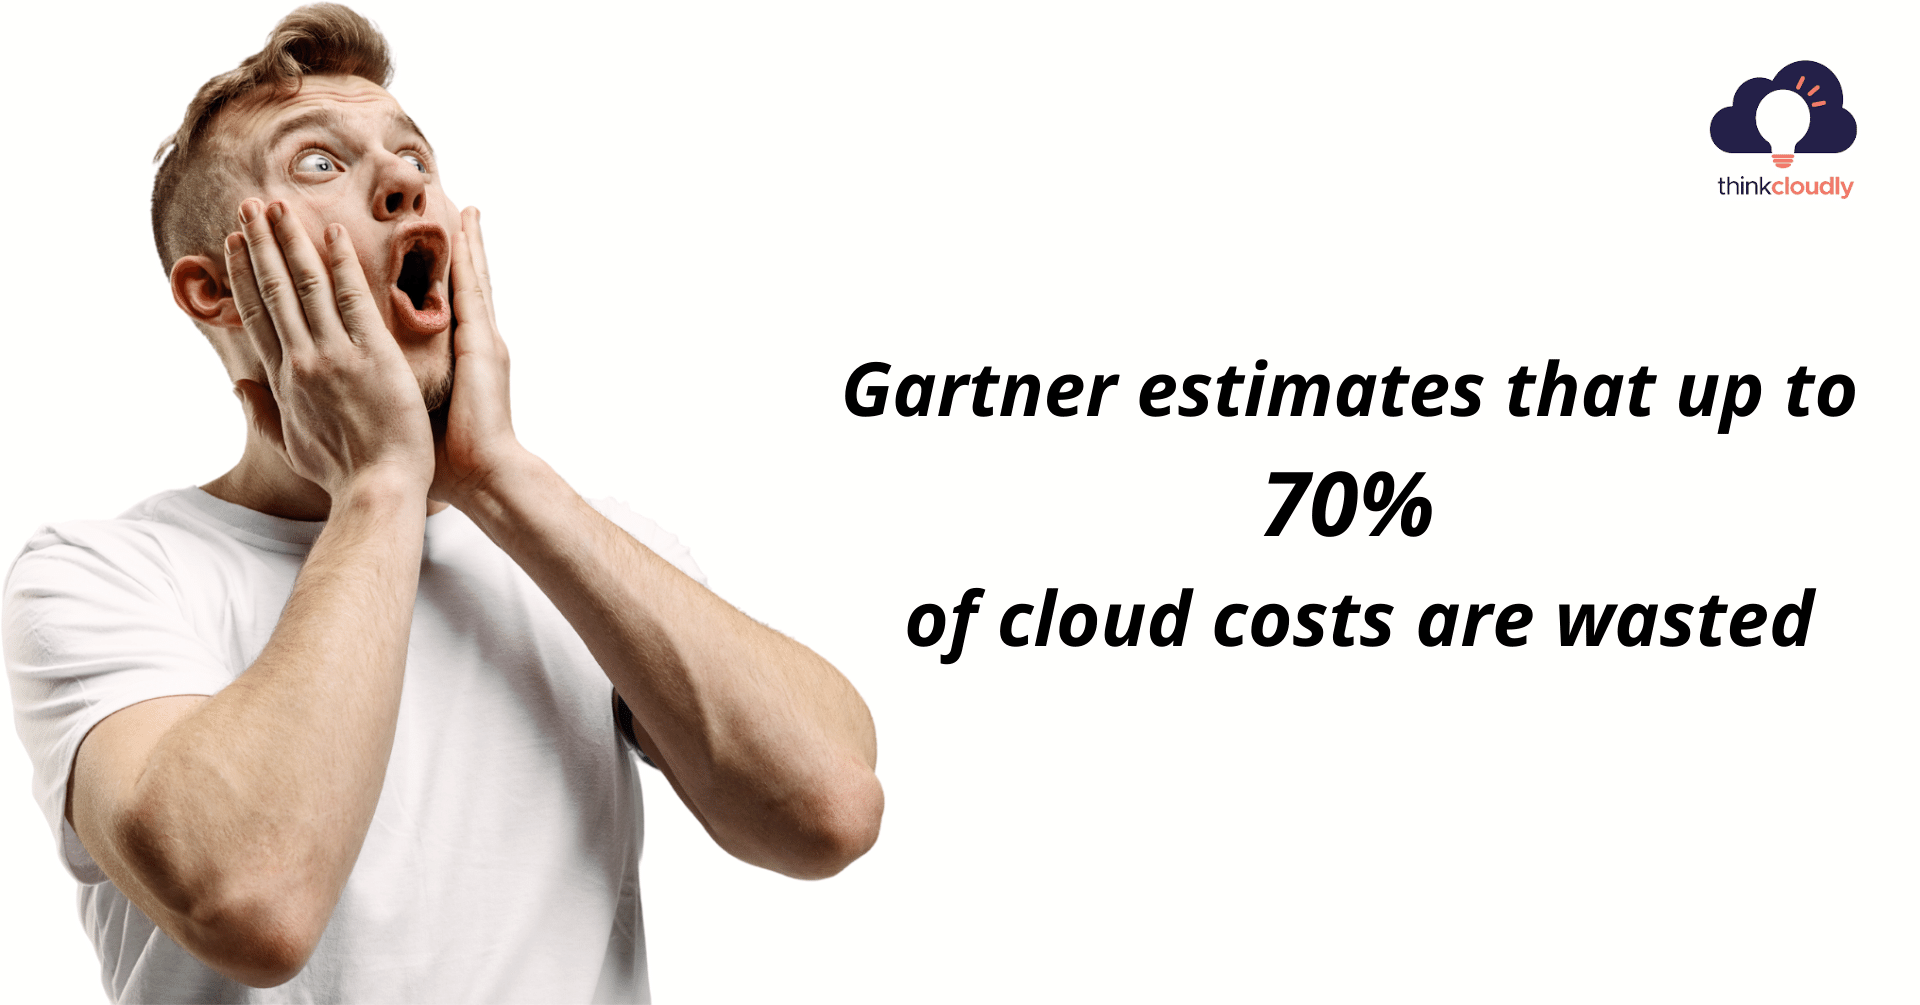 Cloud Cost optimization